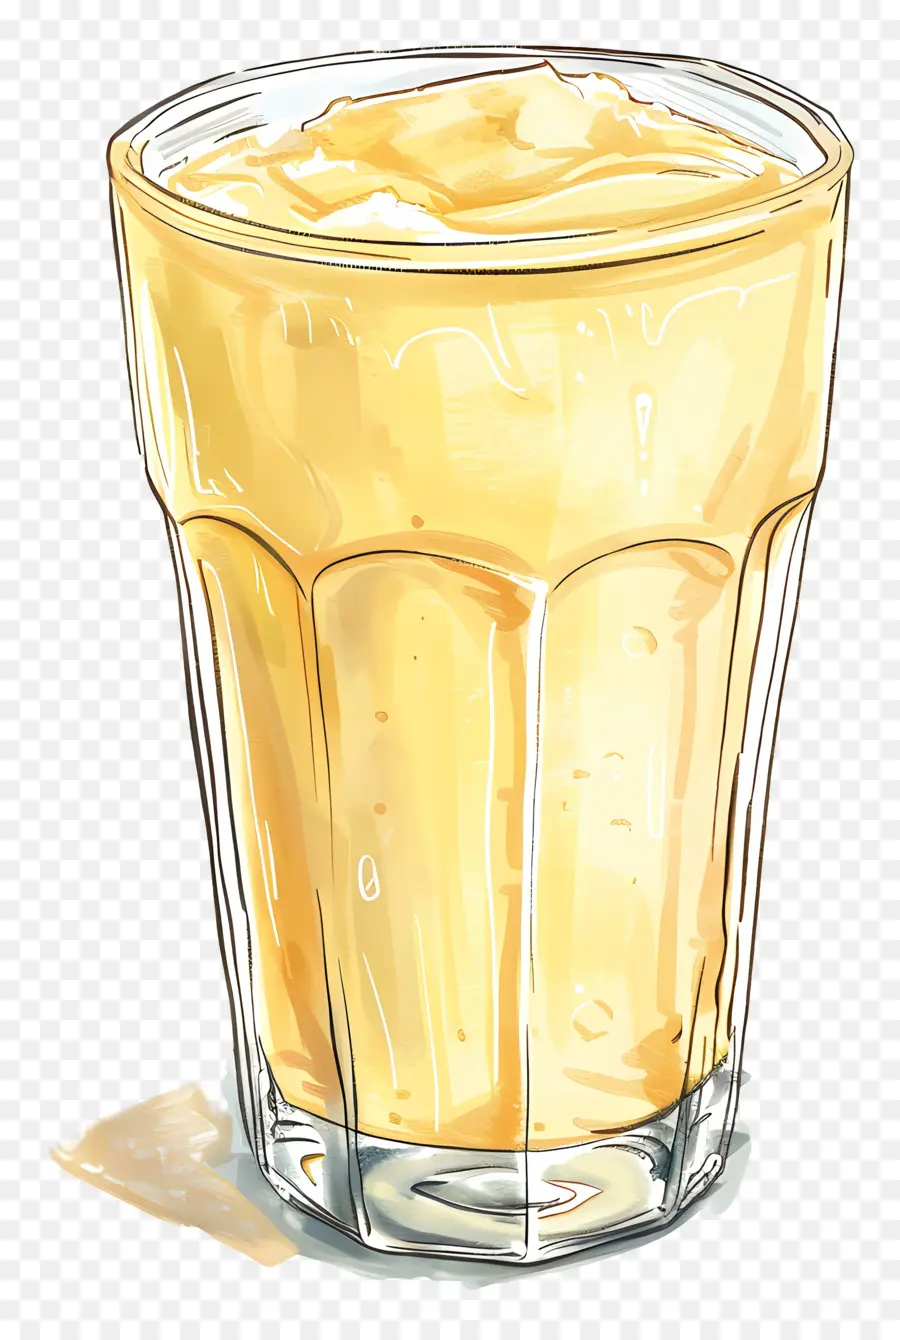 Buttermilch -Getränk Orangensaftglas Schaumig sprudeln - Schaumiges Orangensaftglas auf dunklem Hintergrund